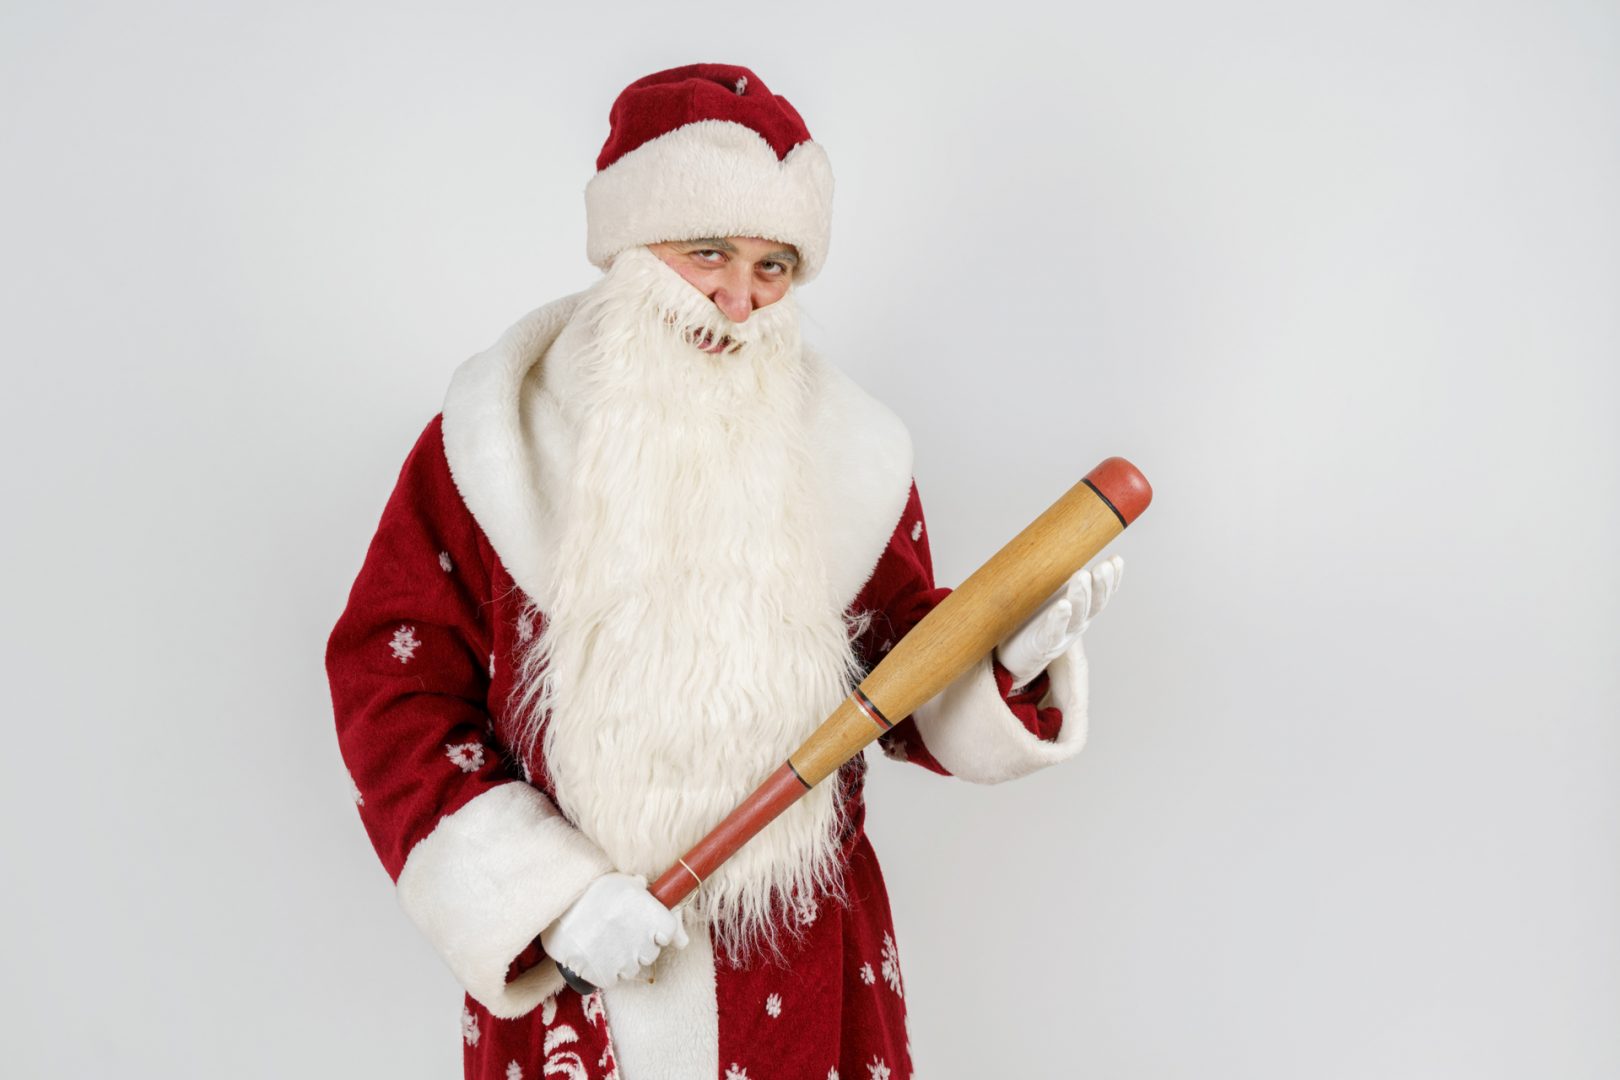 Santa Claus with a baseball bat in his hands.